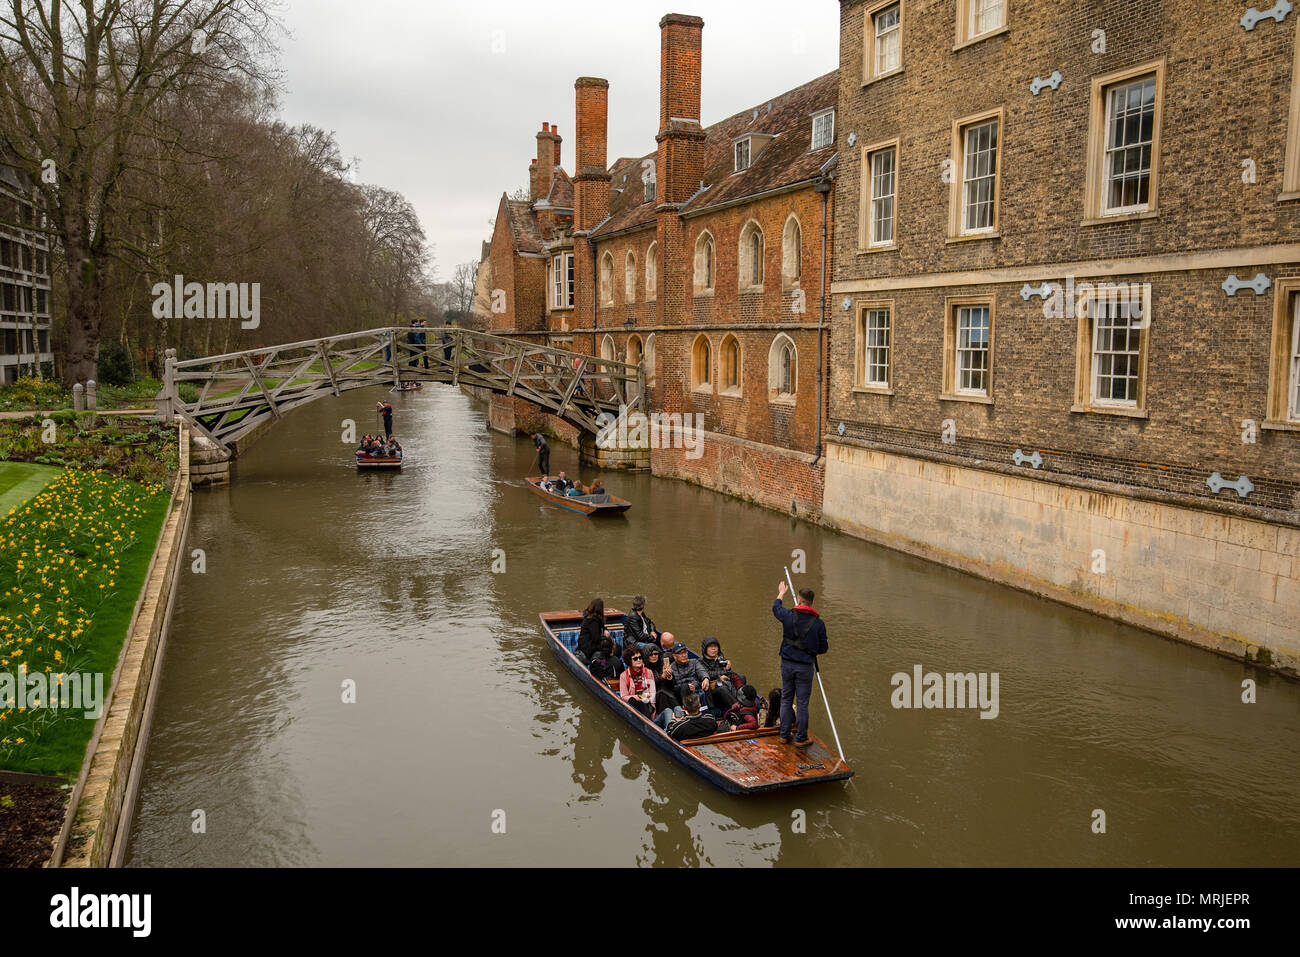 Students of Cambridge University give tourists tours along the River Cam passing under the famous wooden Mathematical Bridge. Cambridge, England. Stock Photo